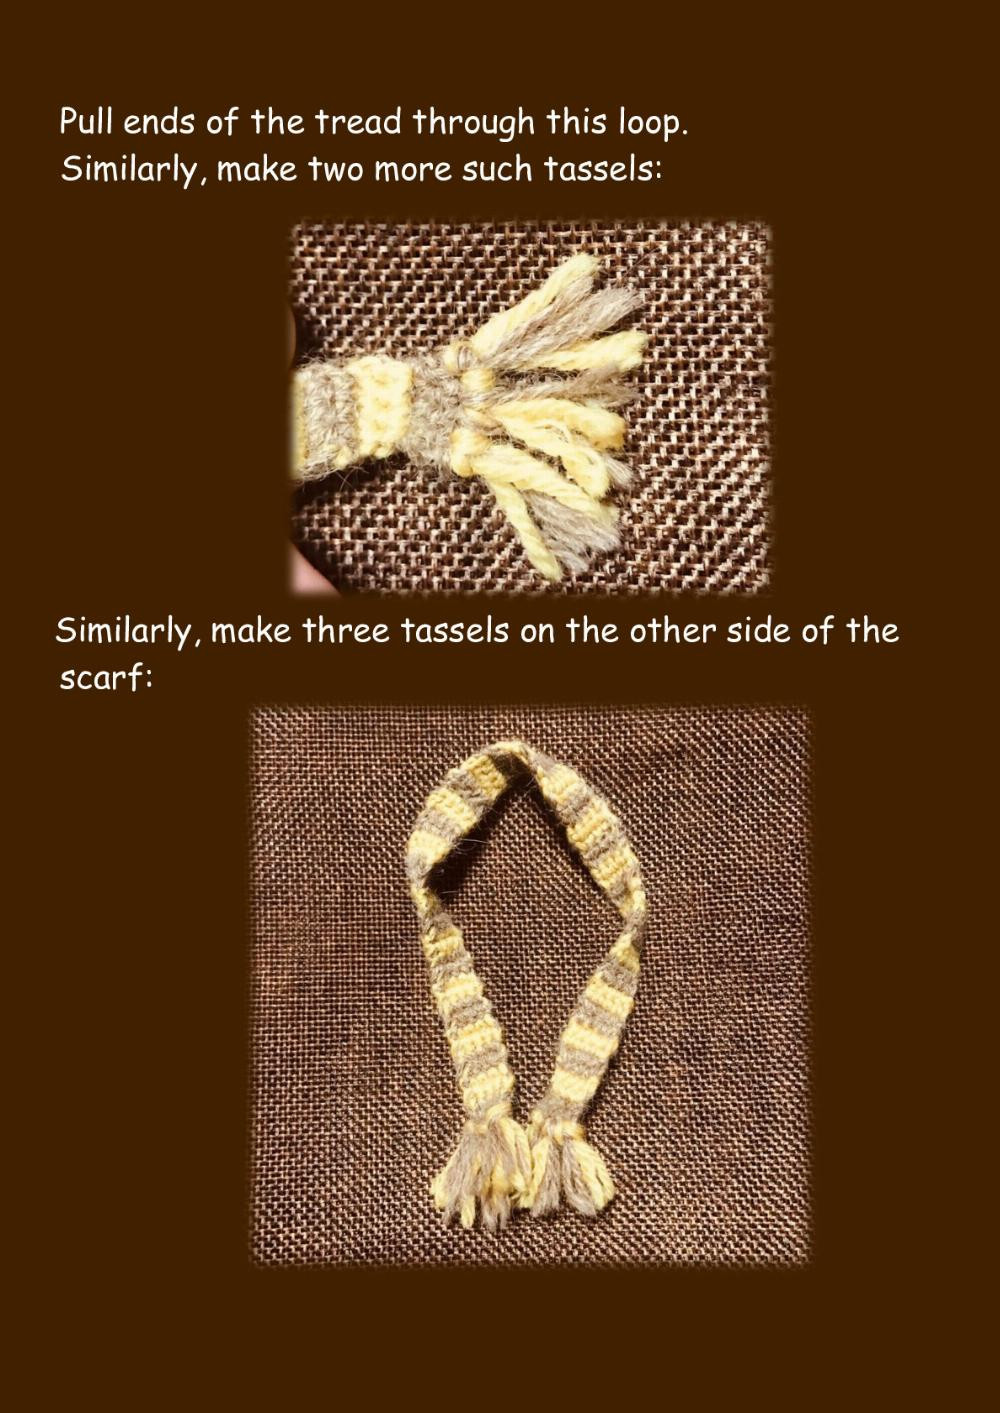 Crochet pattern “Panda” Pattern includes: - panda -hat -scarf Designer